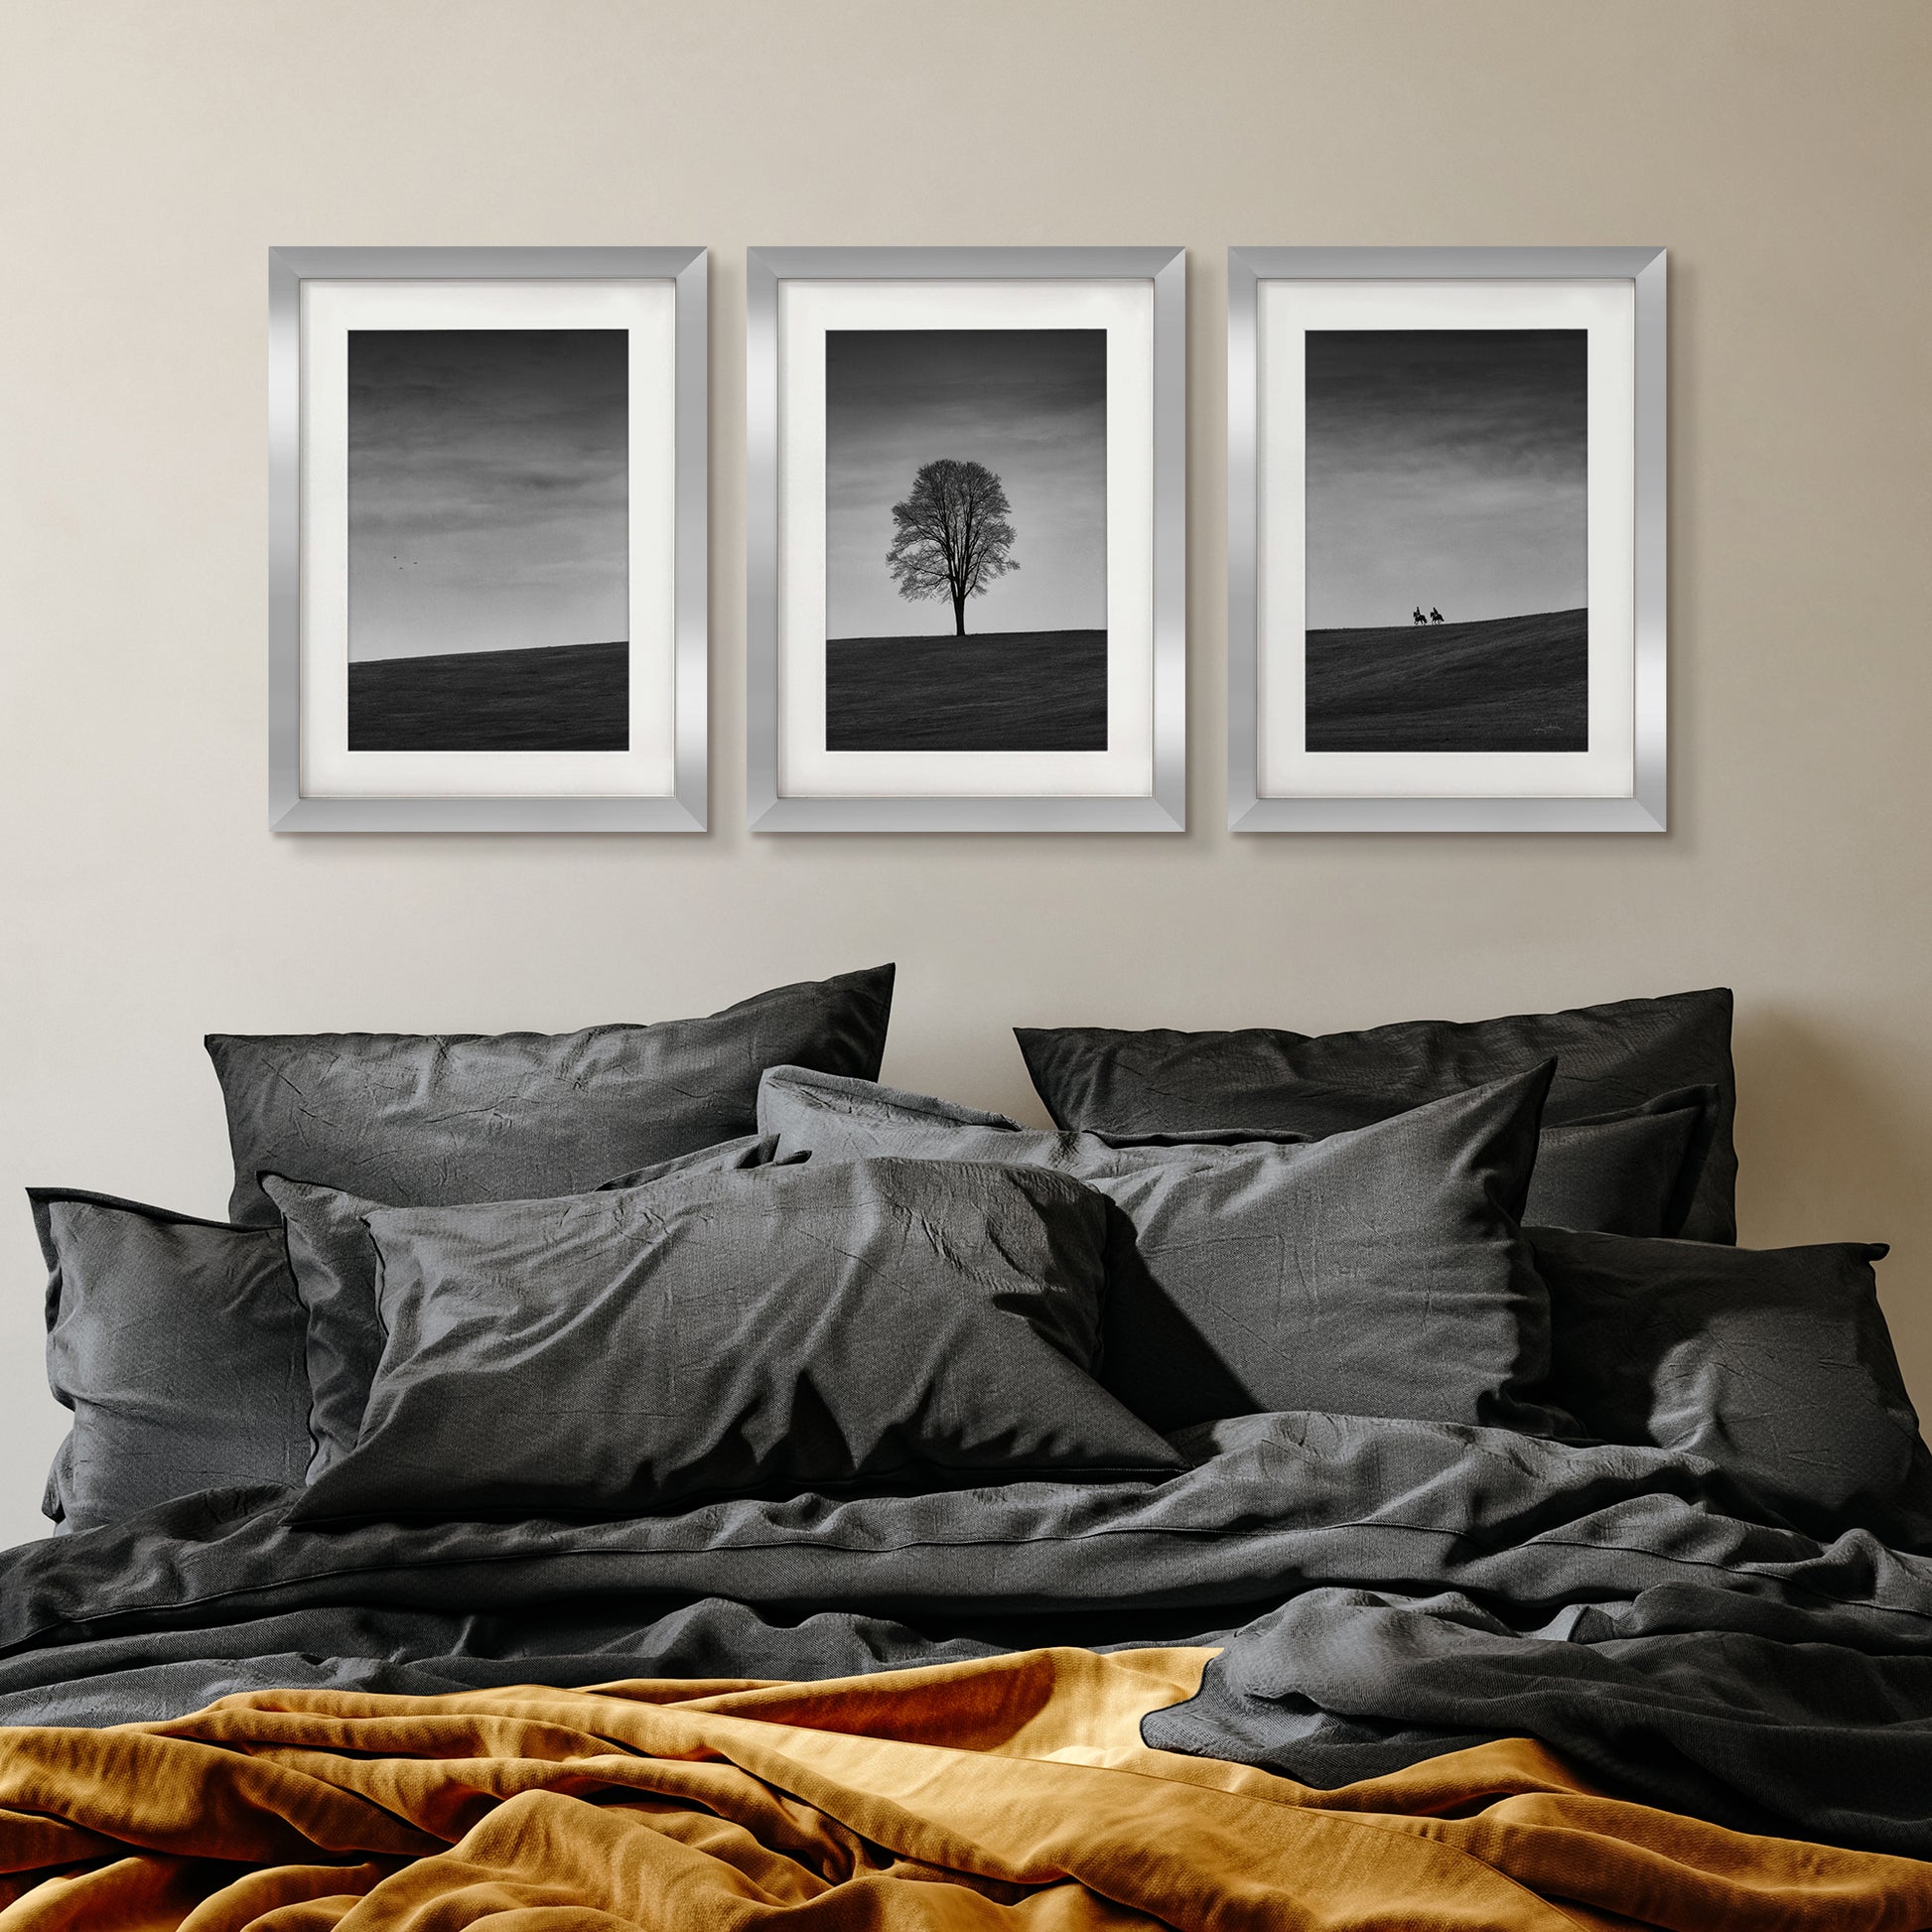 Dusk Landscape by Wild Apple - 3 Piece Gallery Framed Print with Mat Art Set